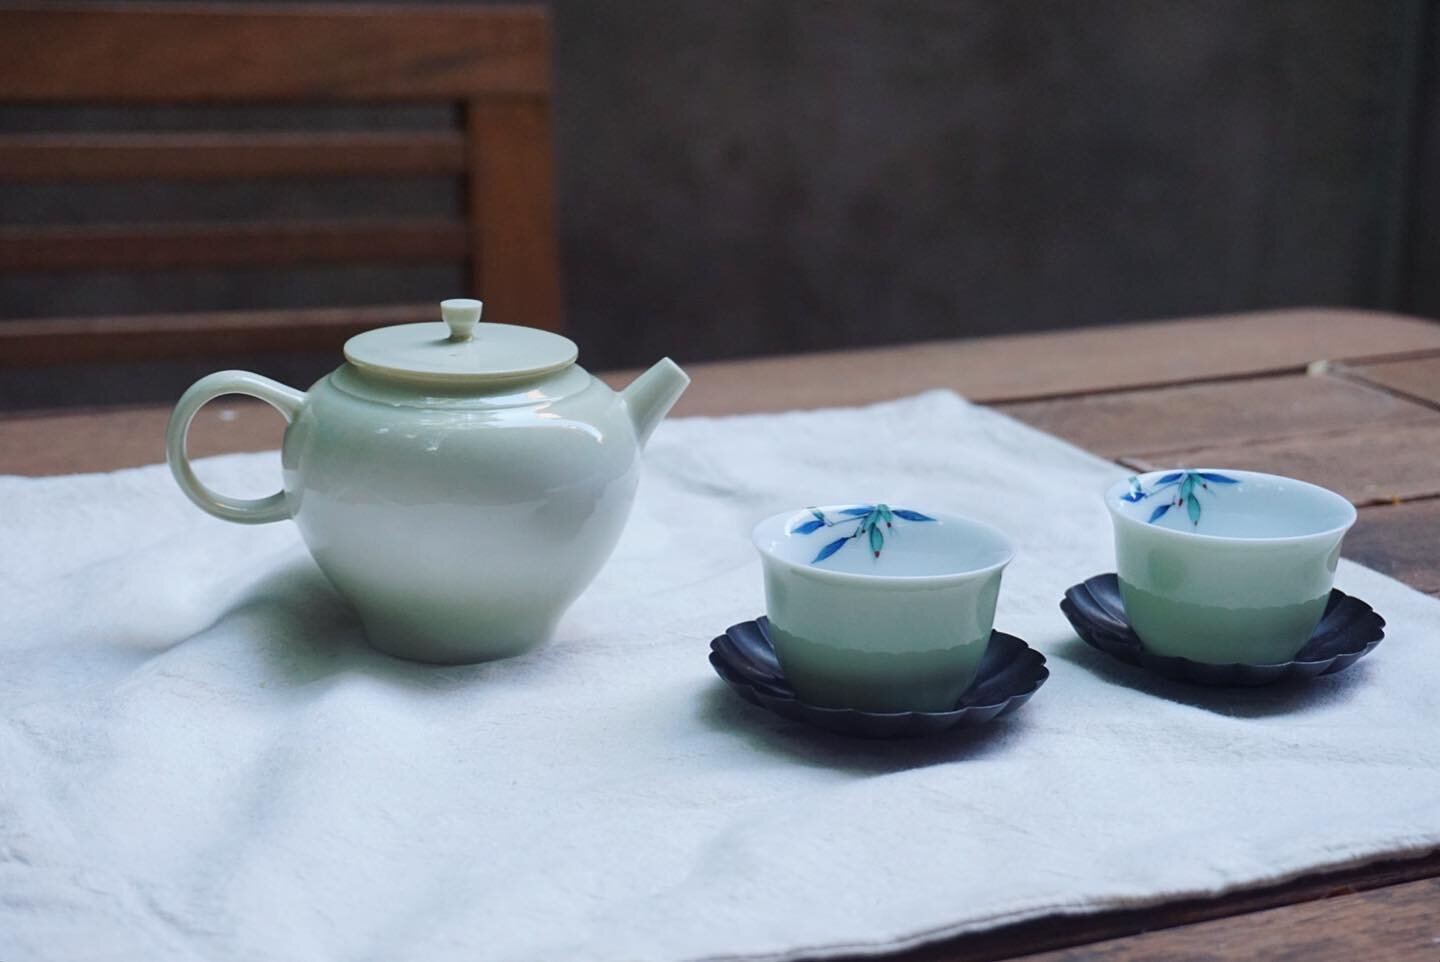 Simple tea setup makes it easy to have tea anywhere anytime.
.
.
#teaware #teapot #teacup #tea #simplicity #teatime #lifestyle #tshopny